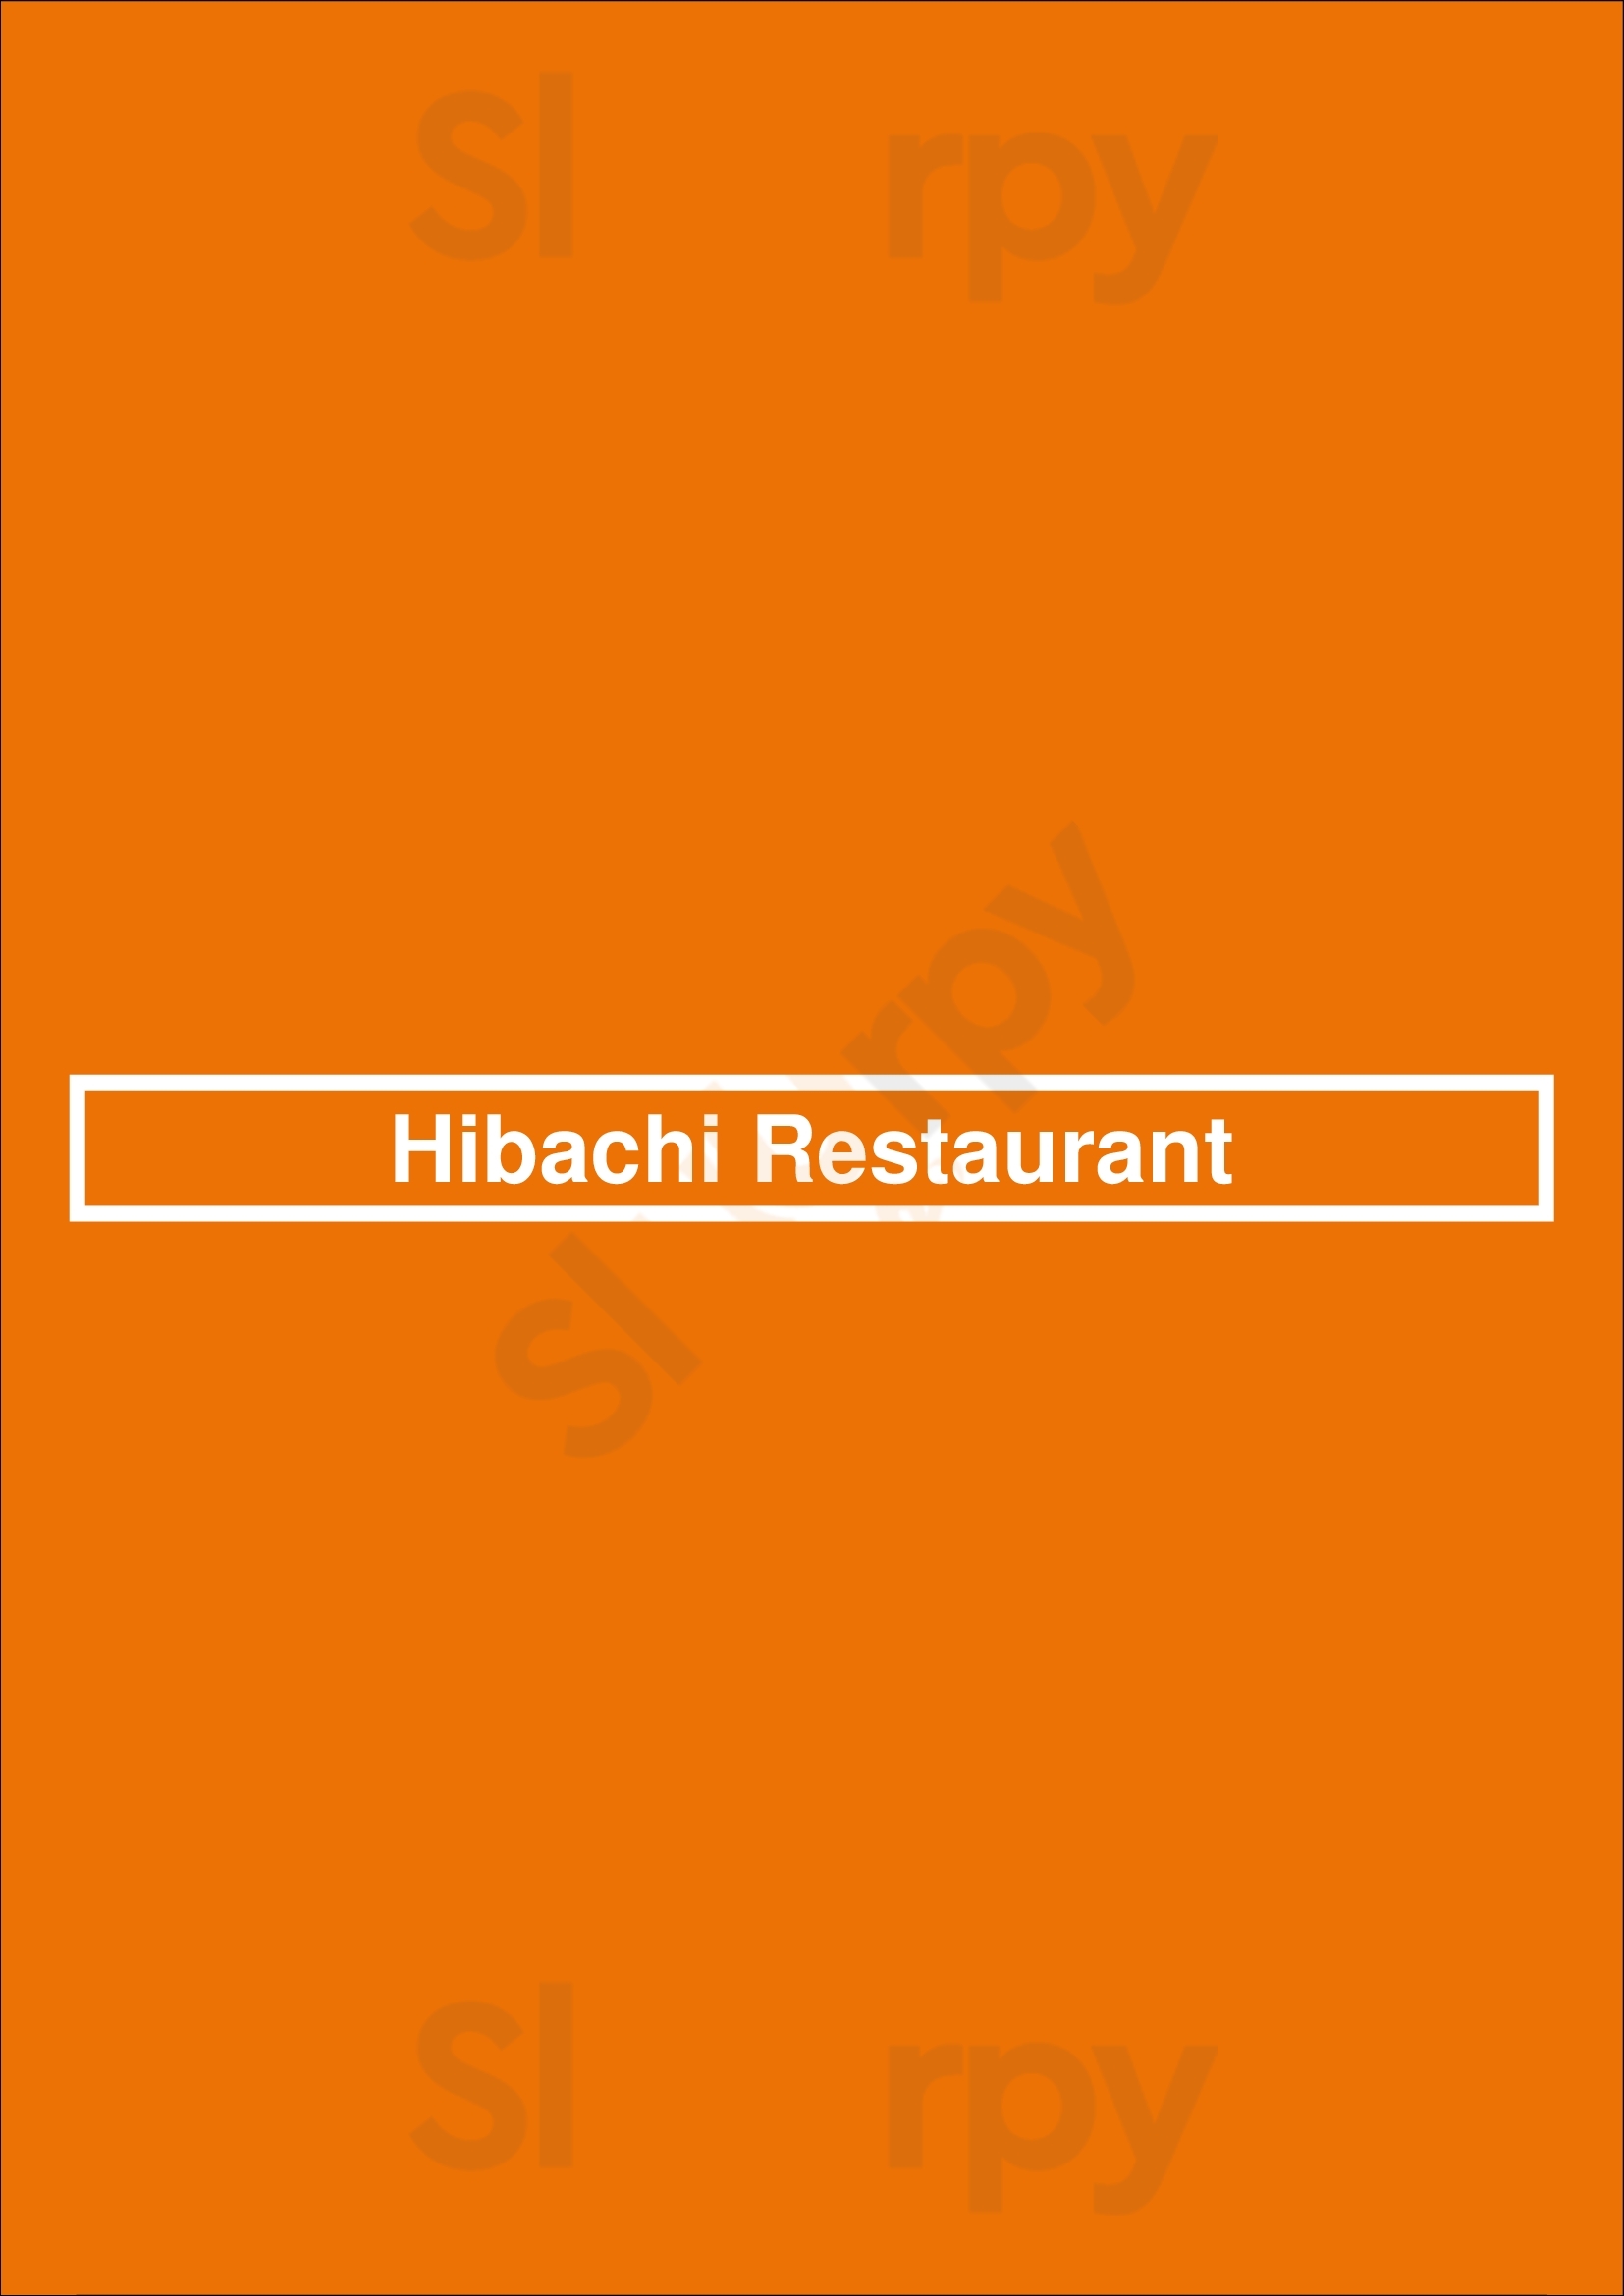 Hibachi Restaurant Burlington Menu - 1